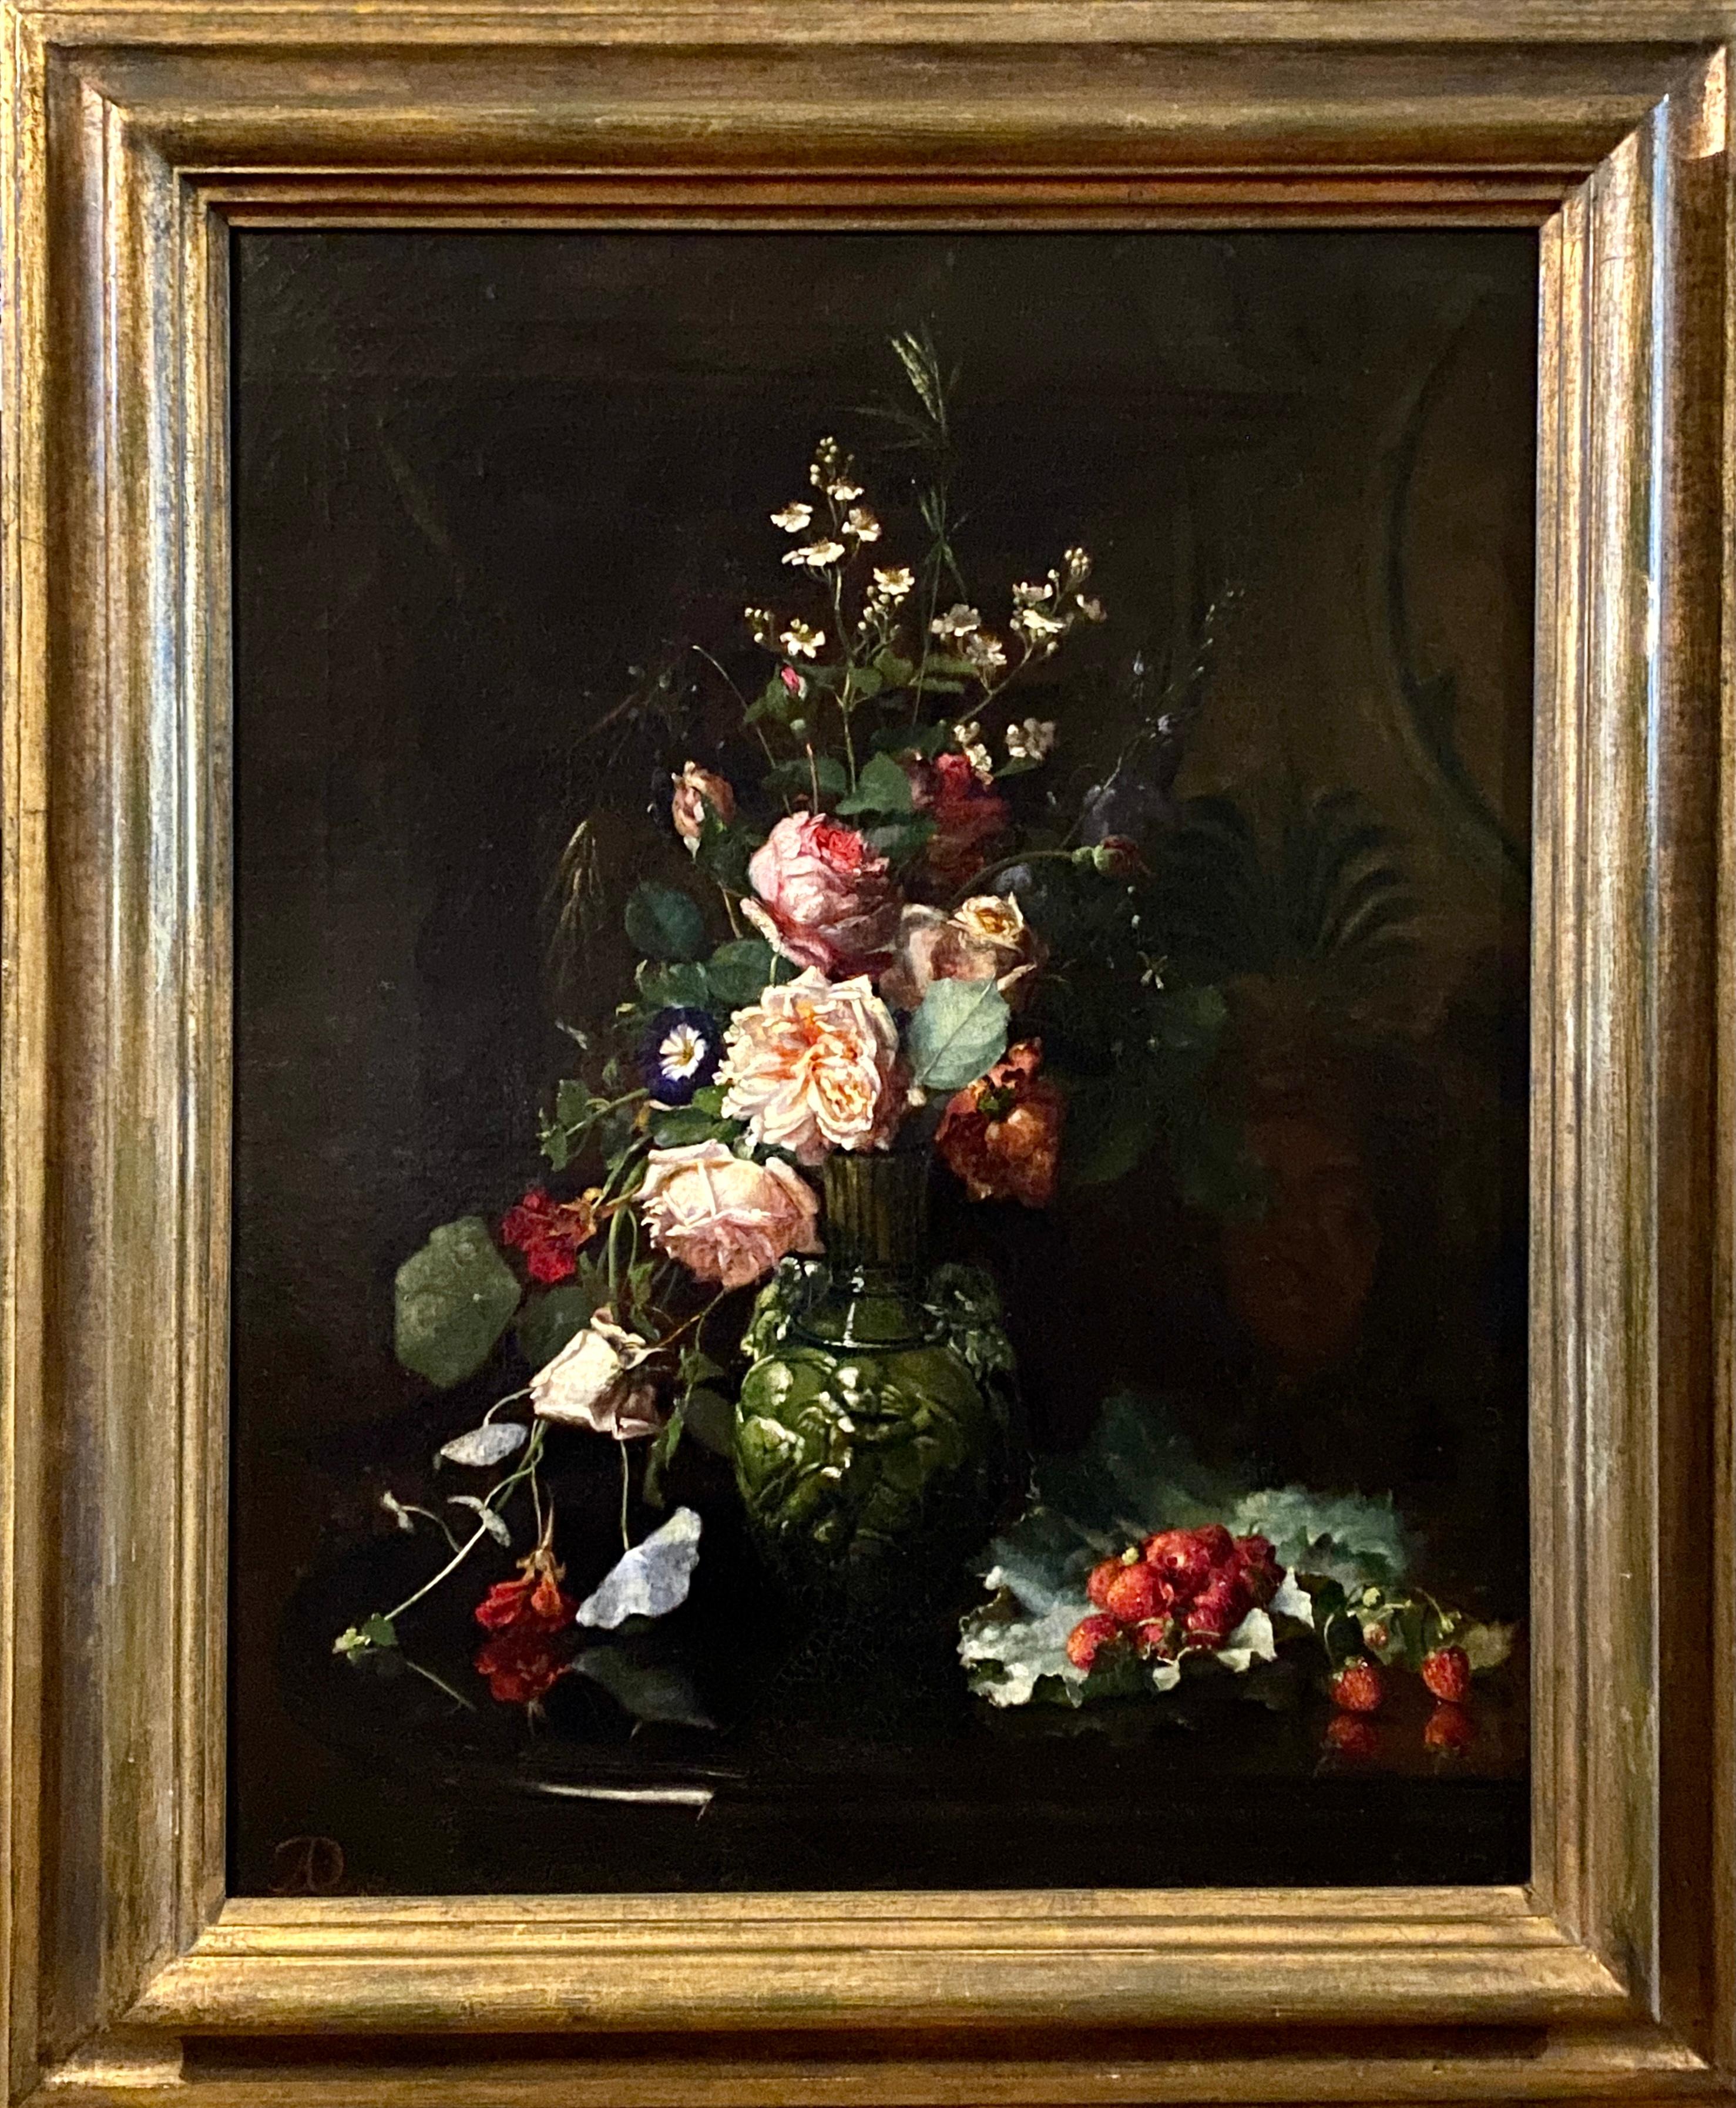 Dohlmann Augusta Johanne Henriette Portrait Painting - Still Life with Flowers and Hidden Portrait, Augusta Dohlmann, 1847 - 1914